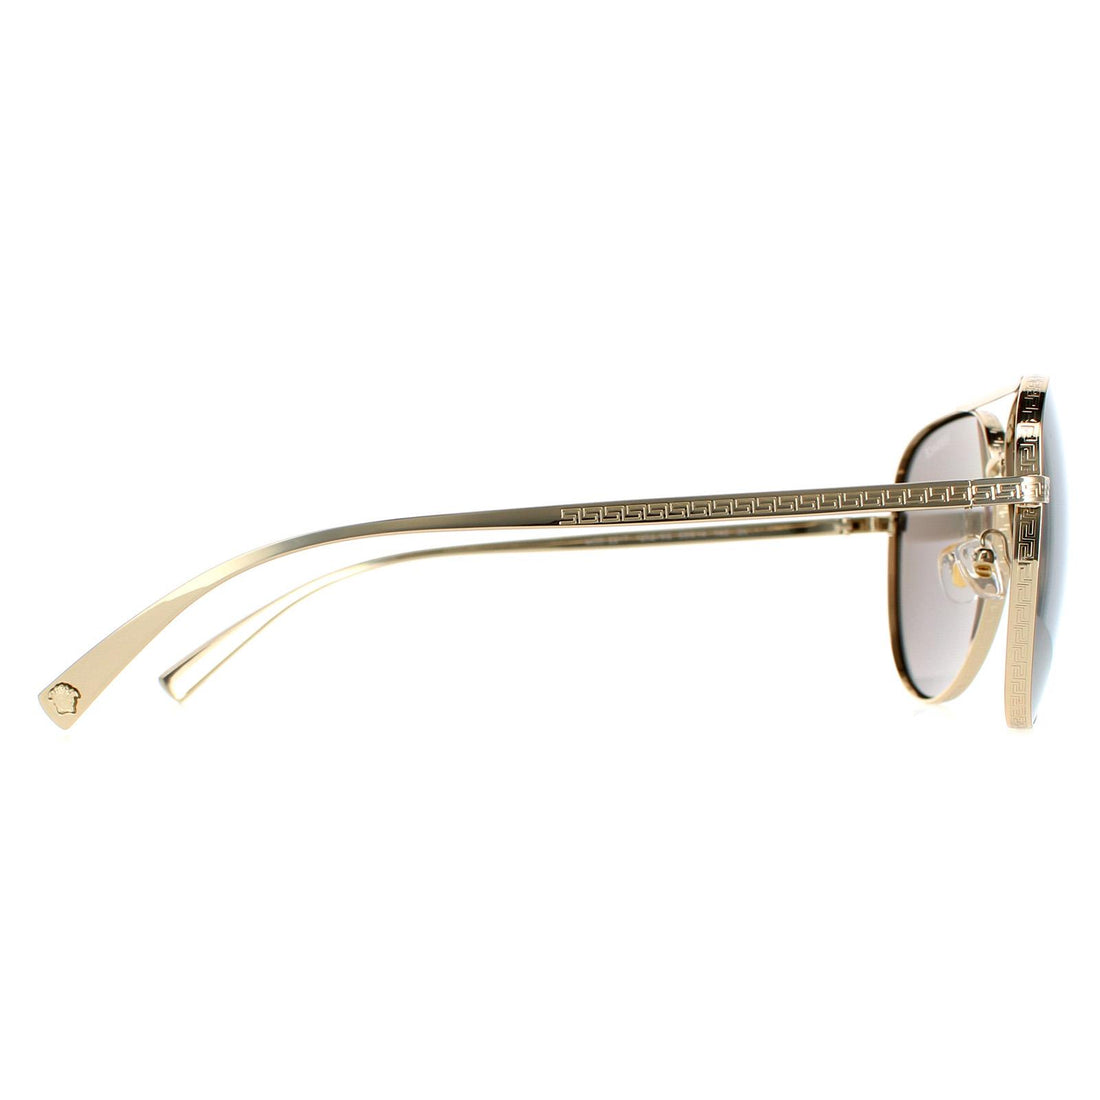 Versace Sunglasses VE2217 12526G Pale Gold Light Gray Silver Mirror